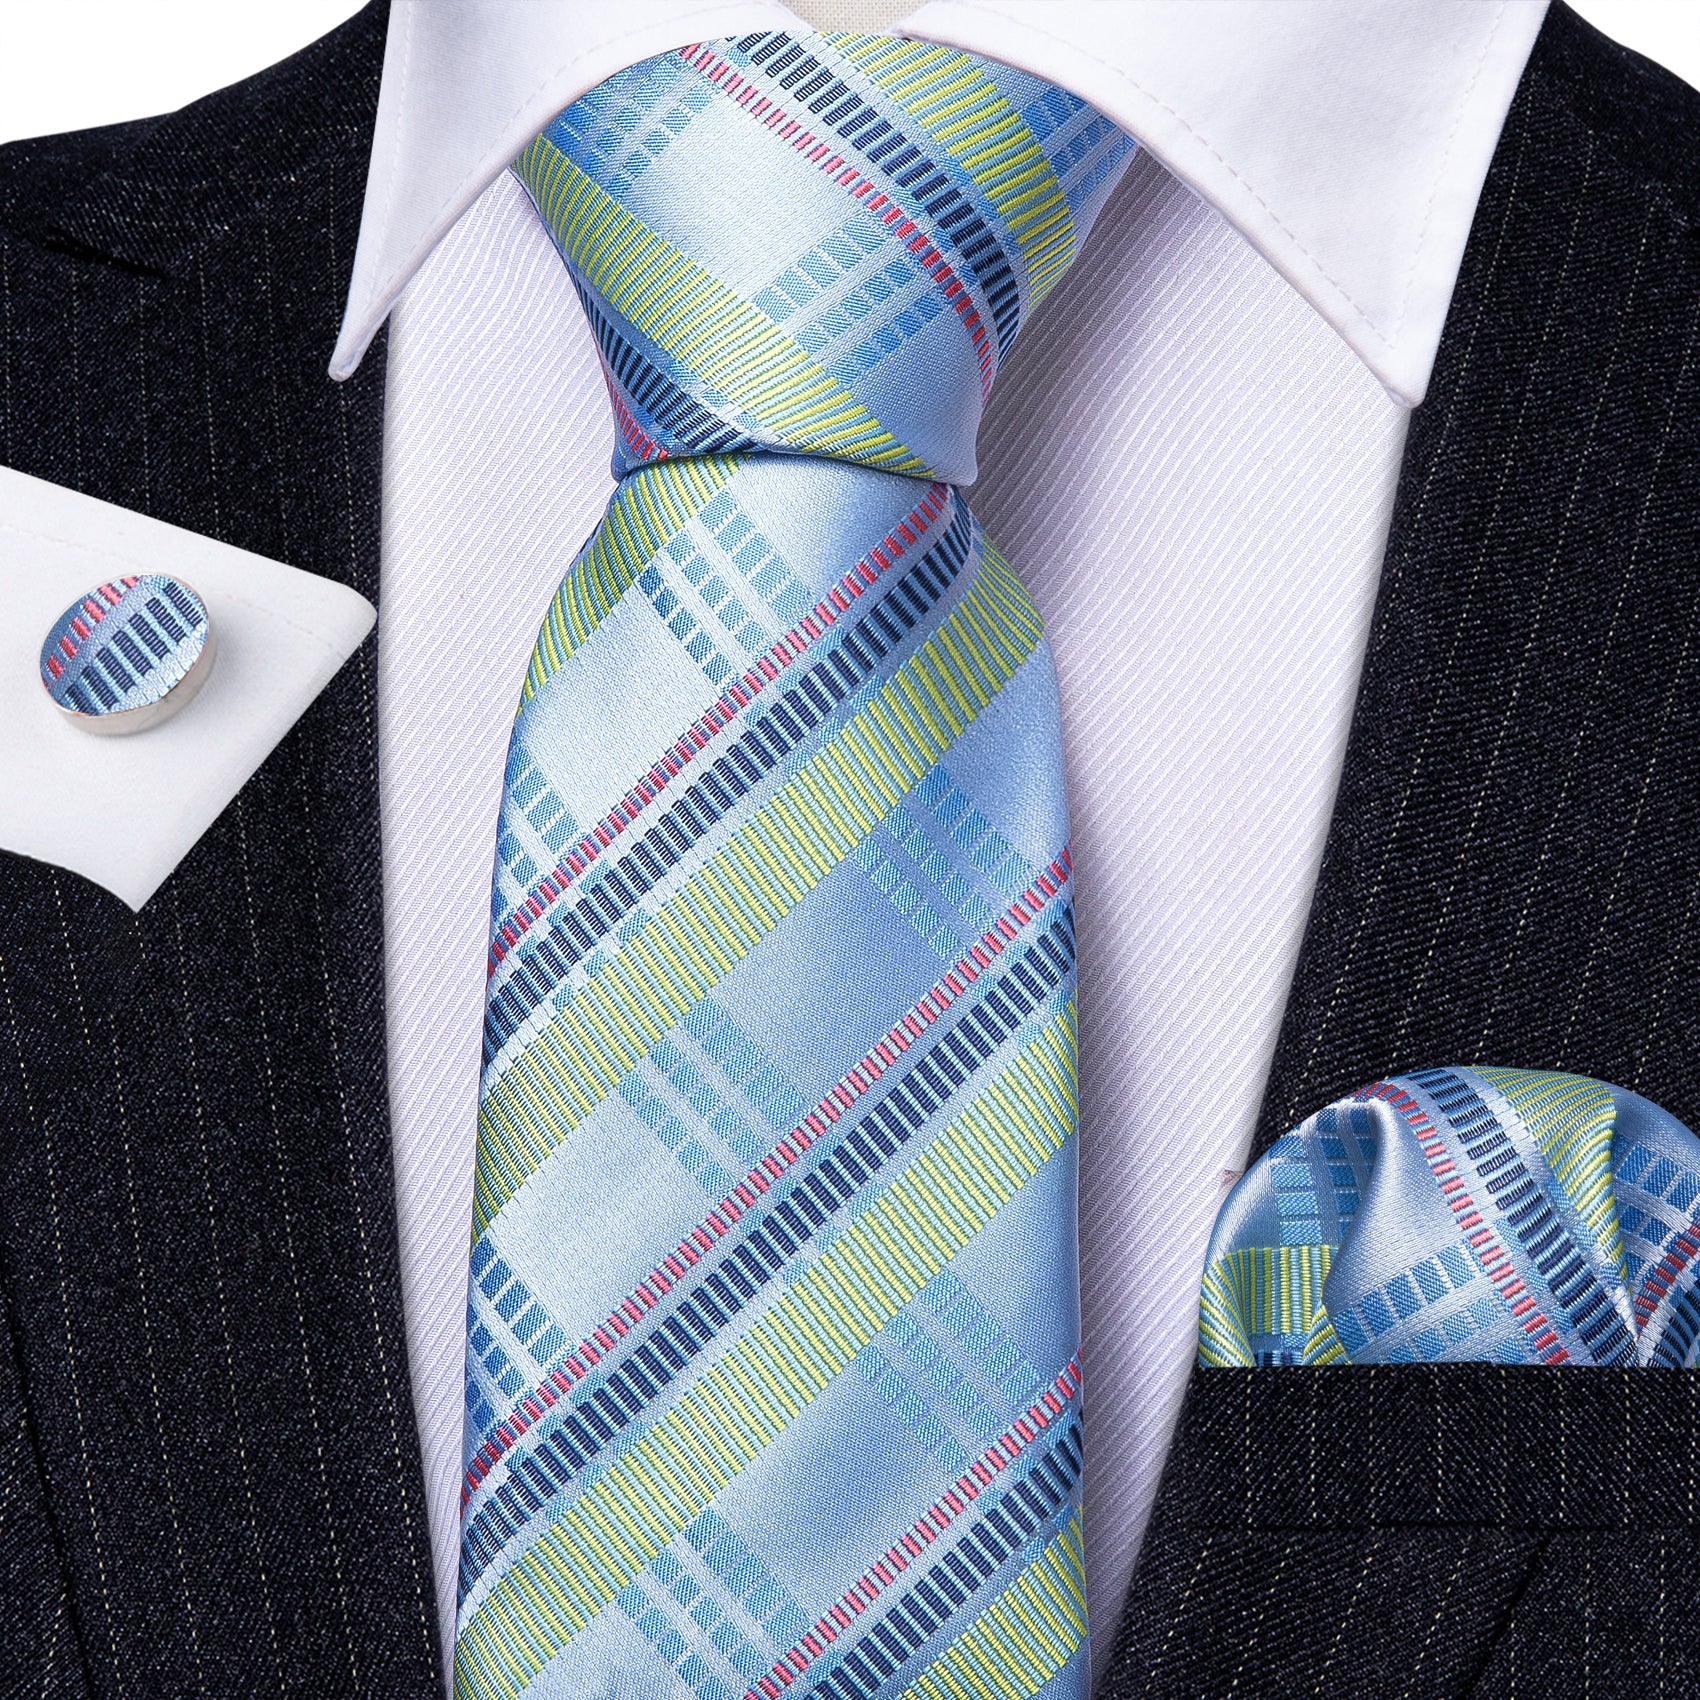 Barry.Wang Blue Tie Turquoise Striped Tie Handkerchief Cufflinks Set